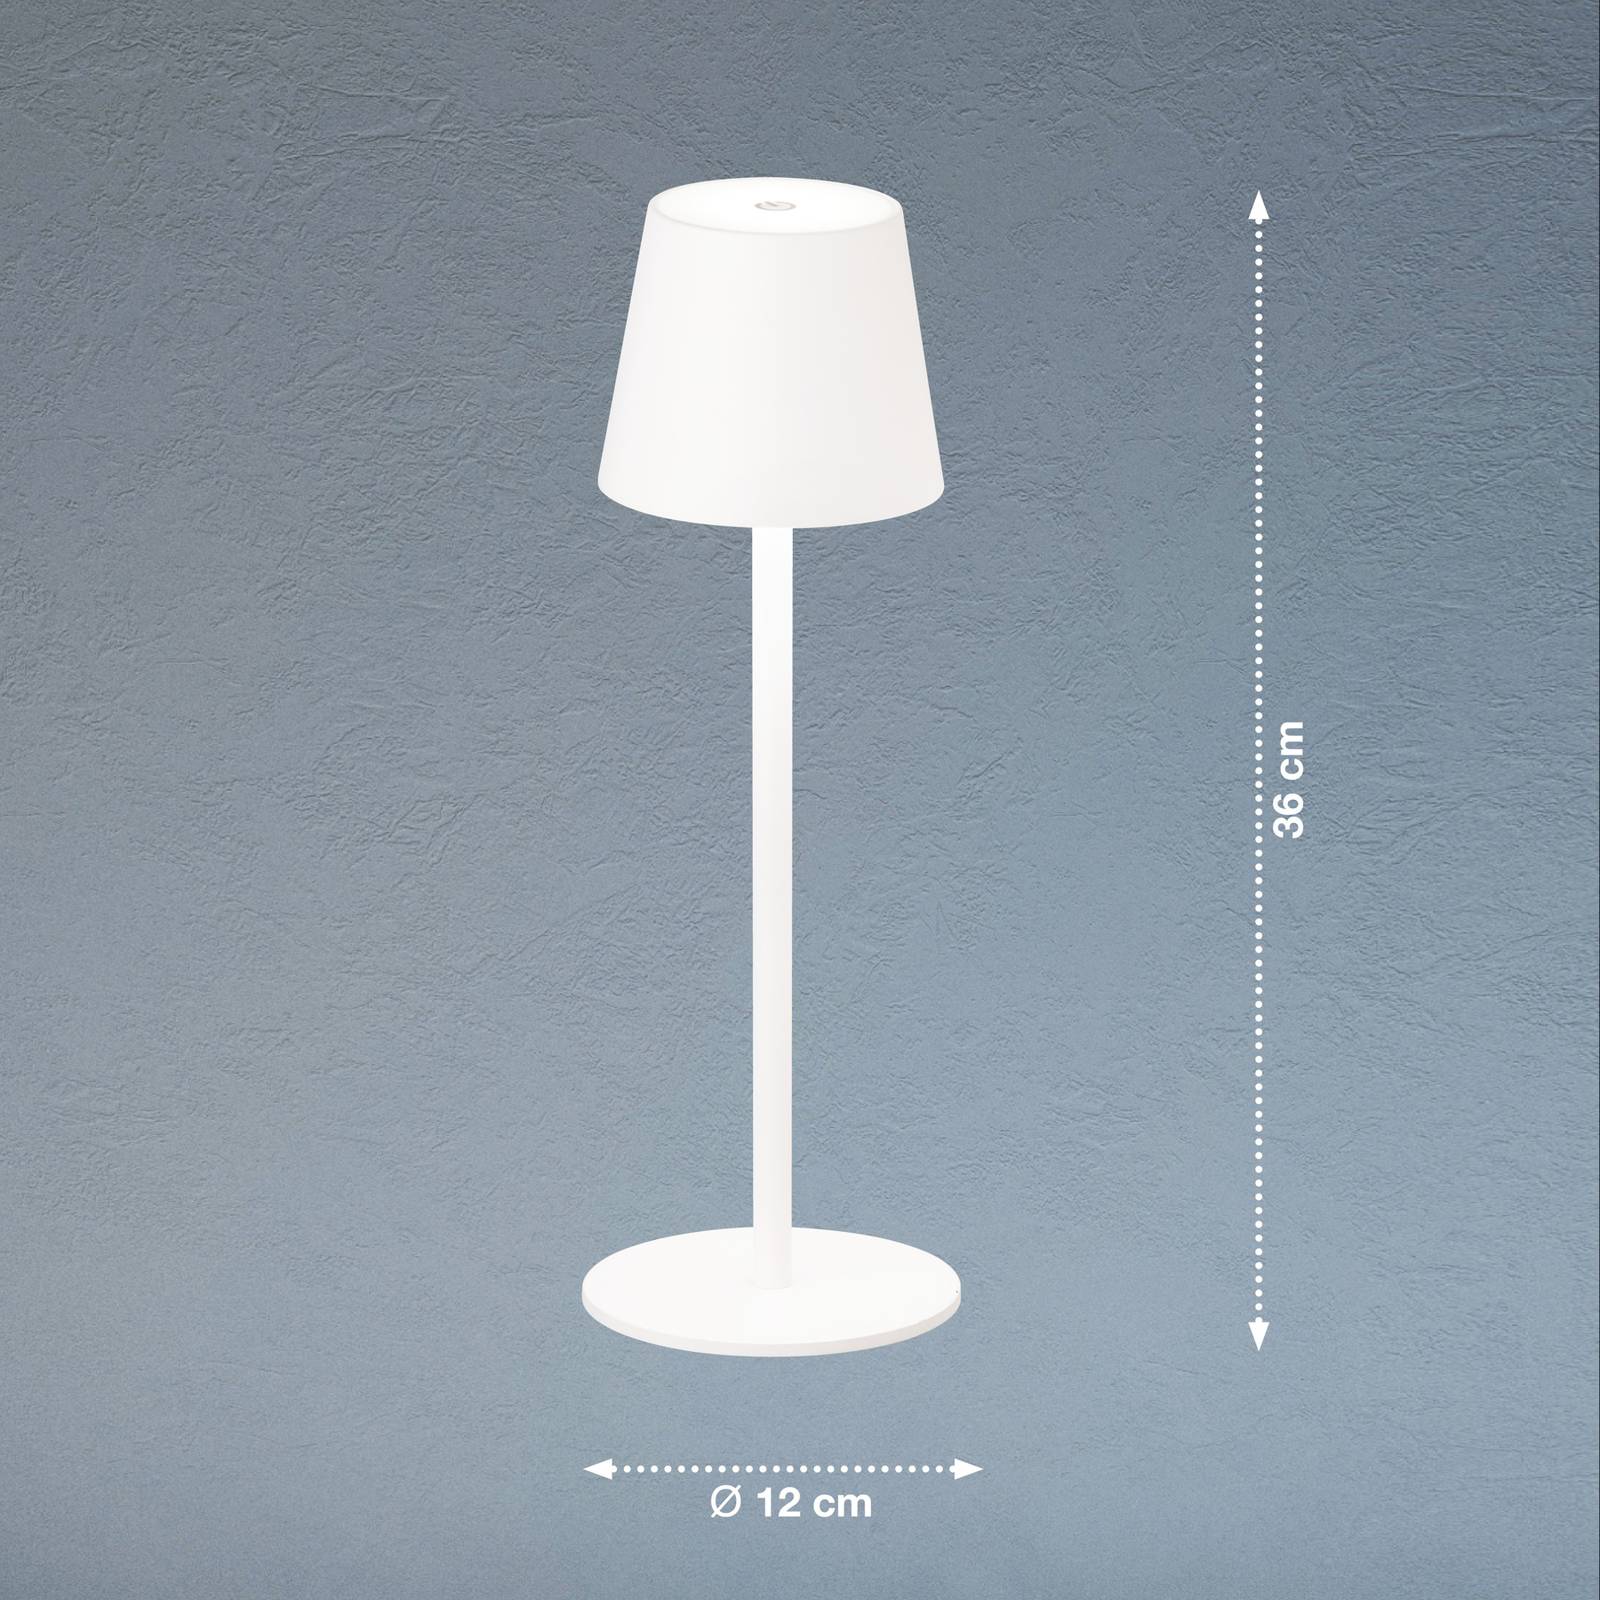 FH Lighting Lampe à poser LED Tropea batterie, blanc sable